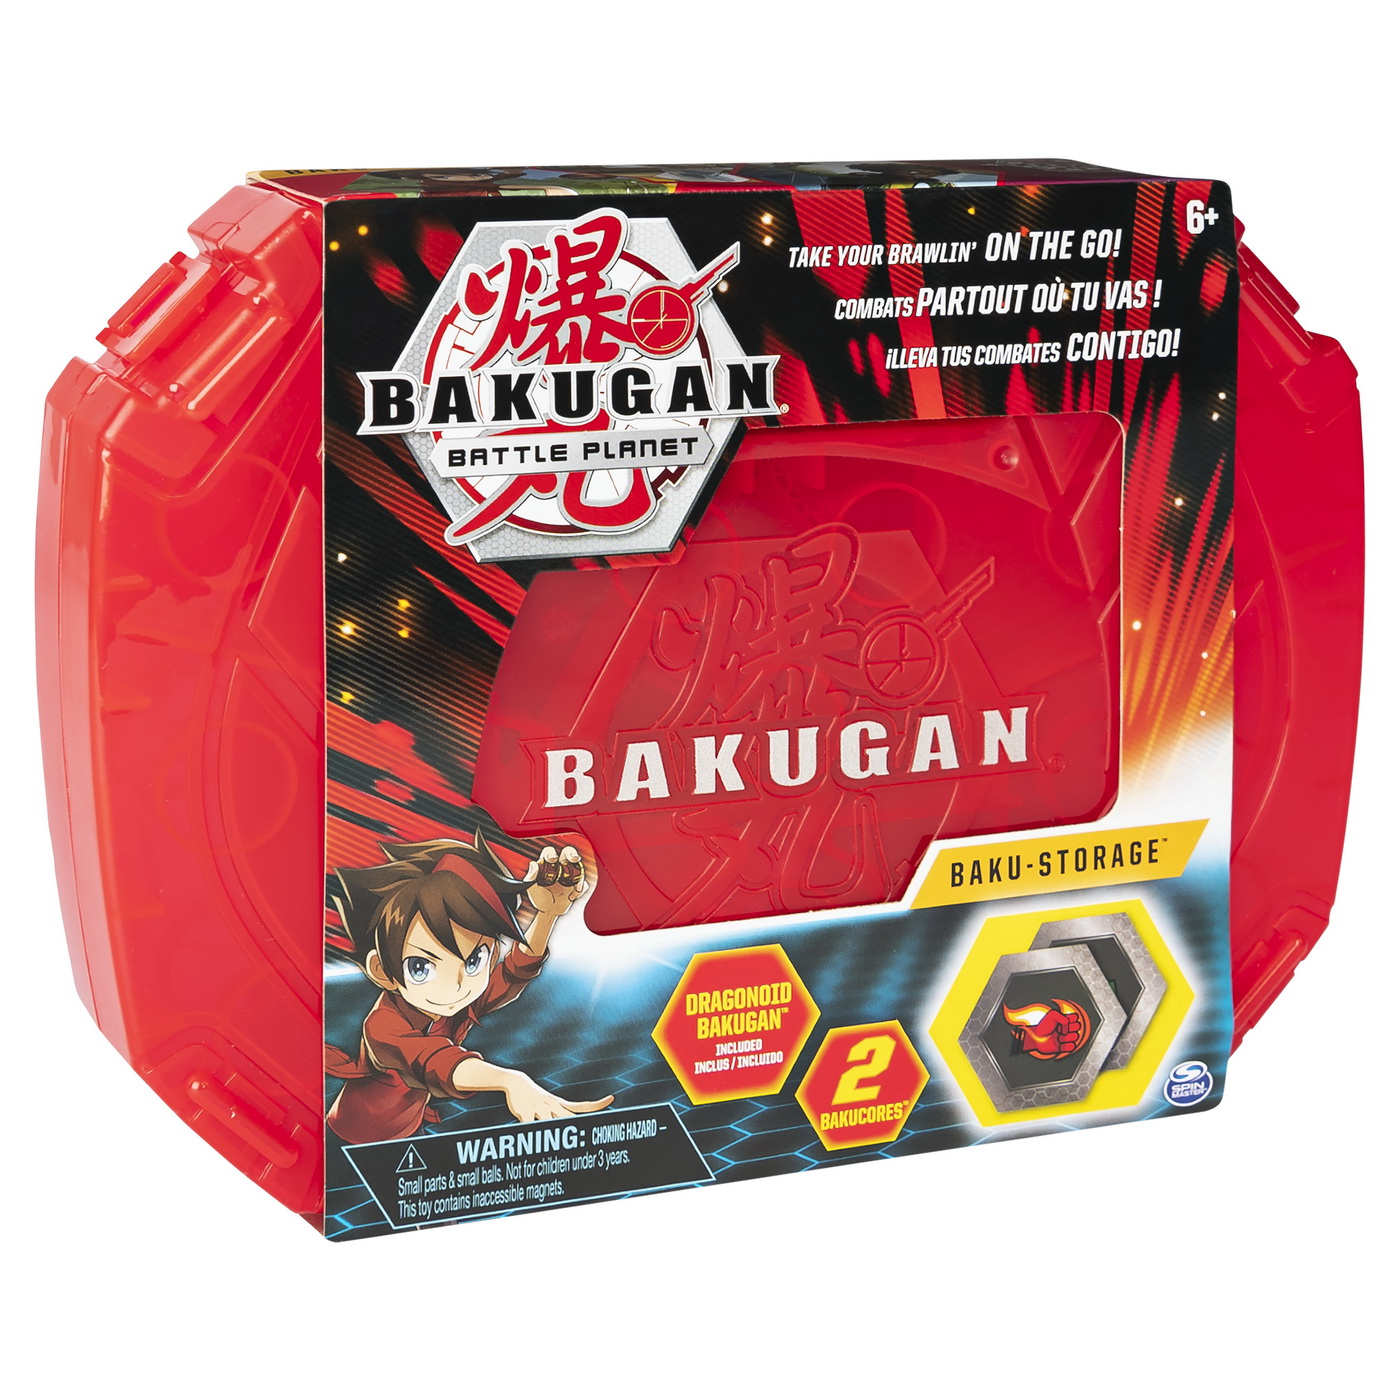 Bakugan Caseta pentru pastrare cu bila dragonoid